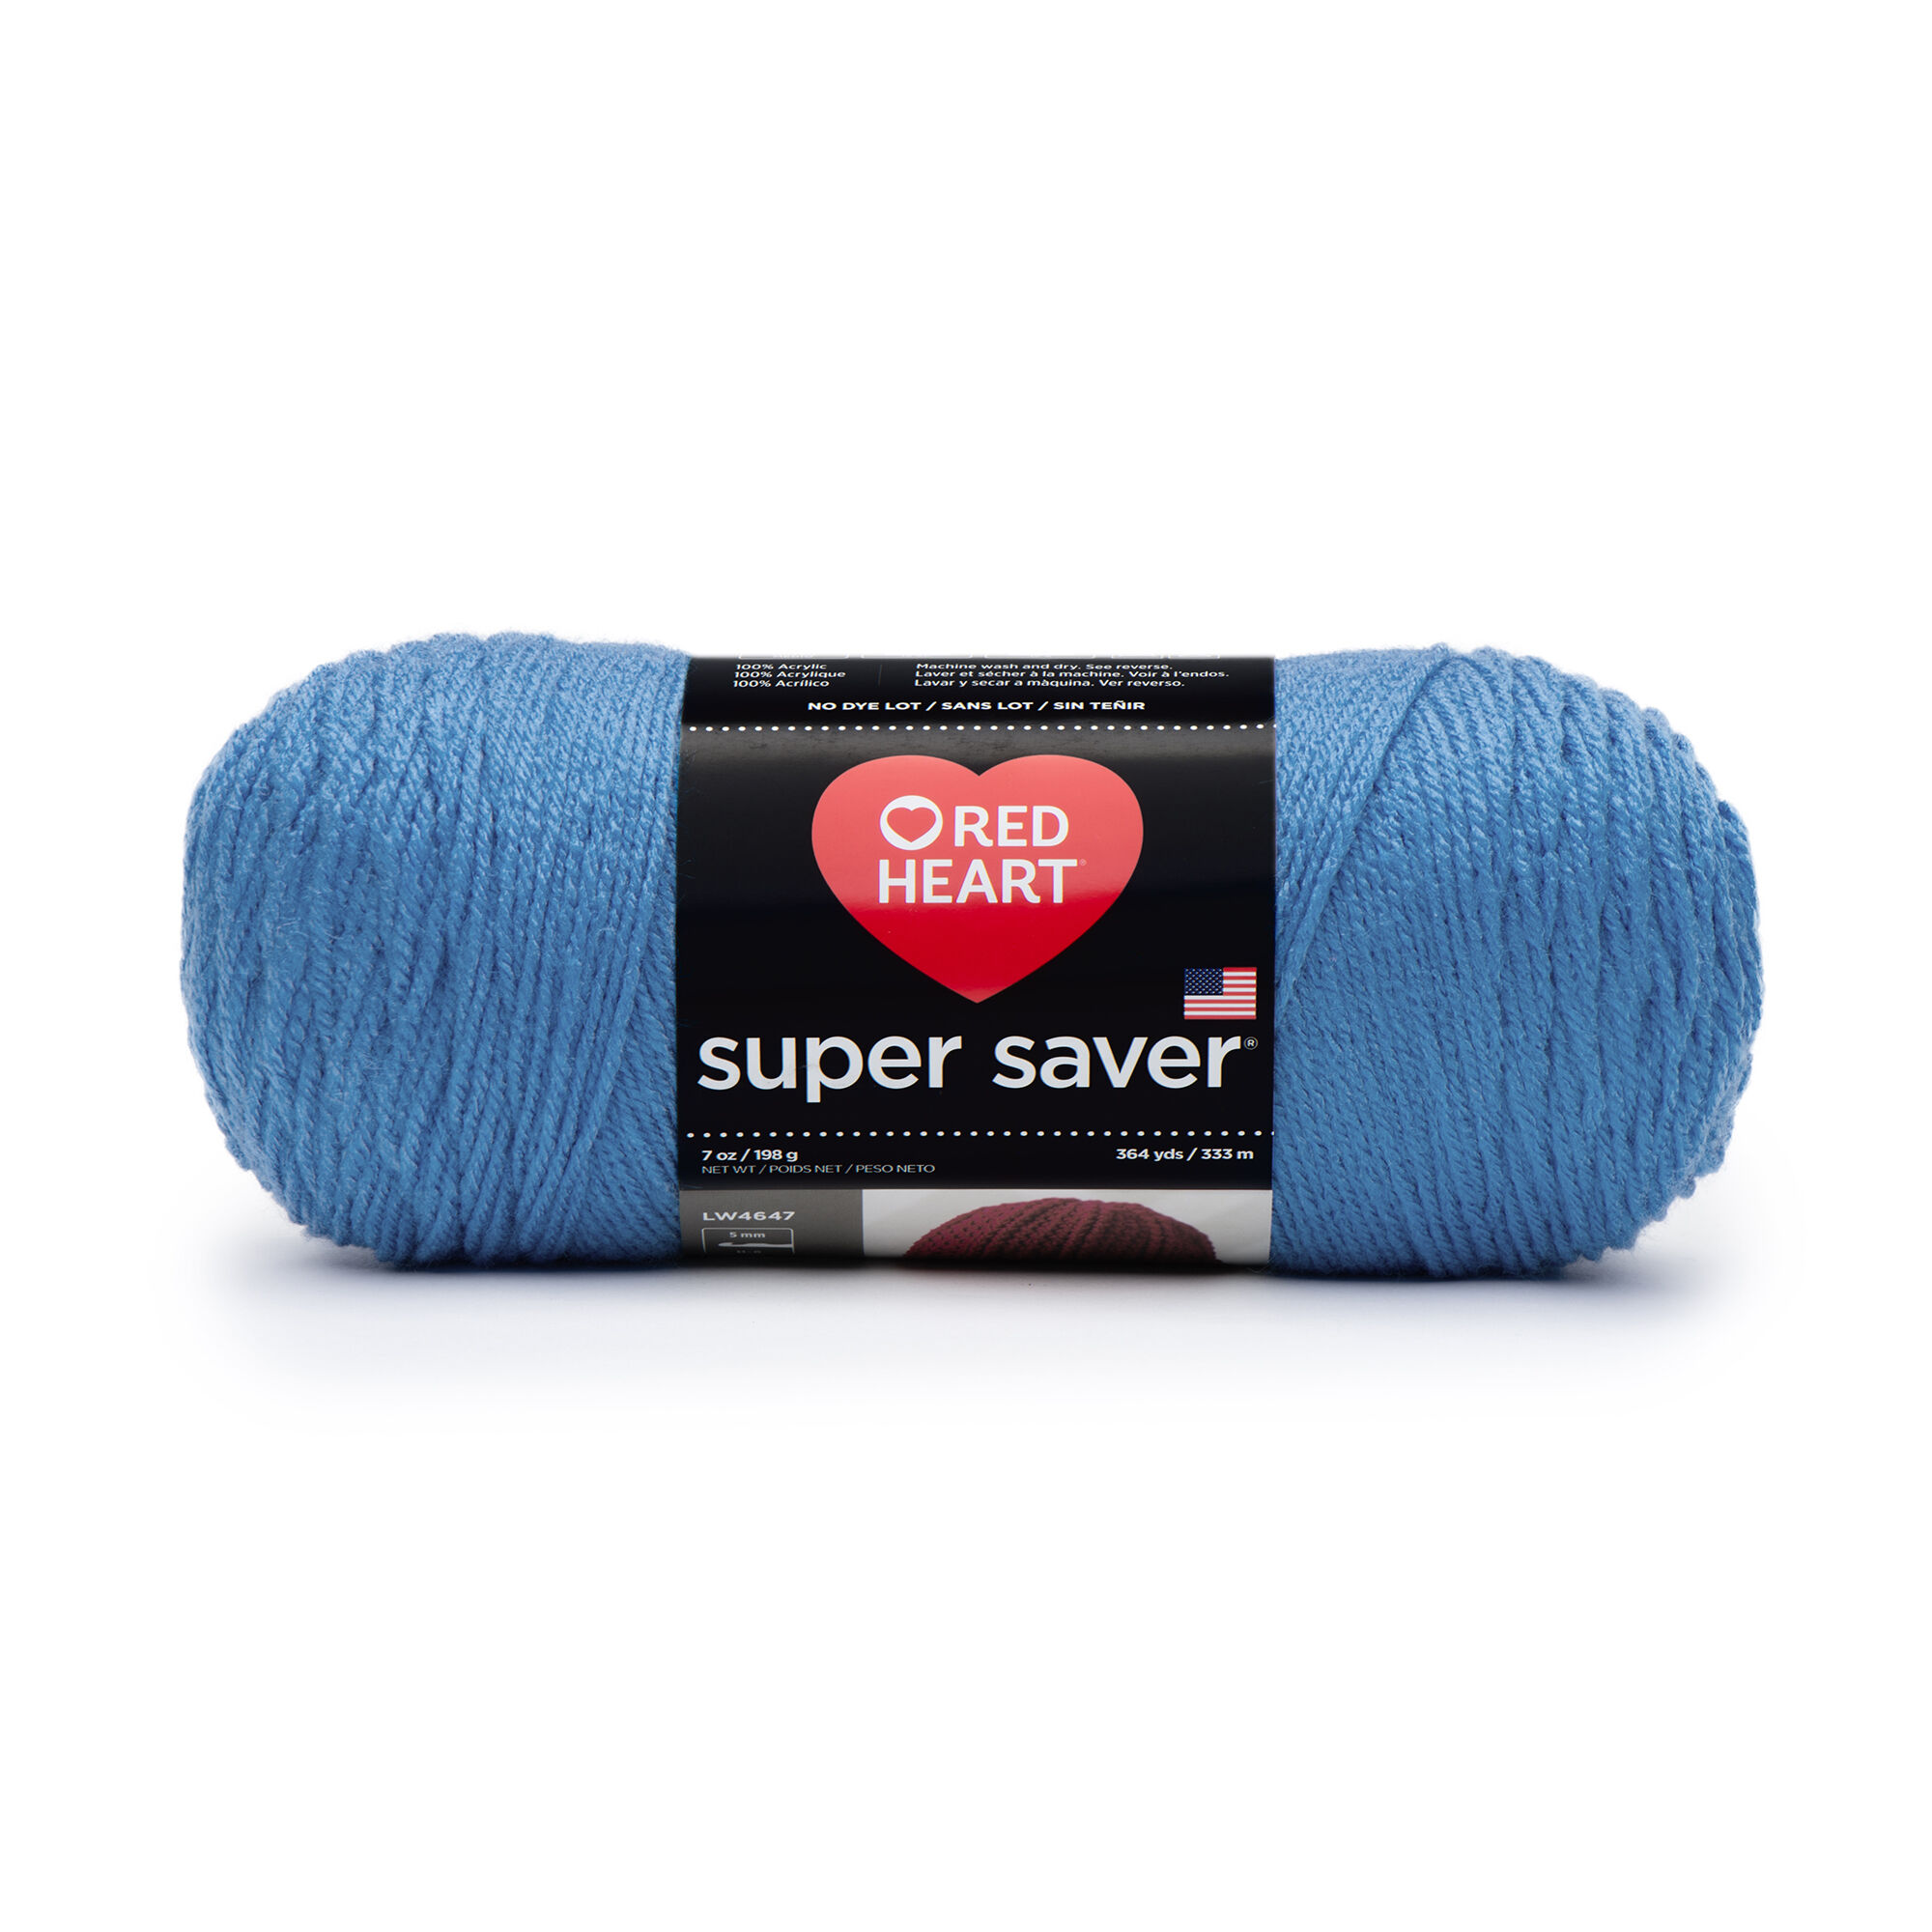 Red Heart Super Saver Yarn, Delft Blue, 7oz(198g), Medium, Acrylic - image 1 of 17